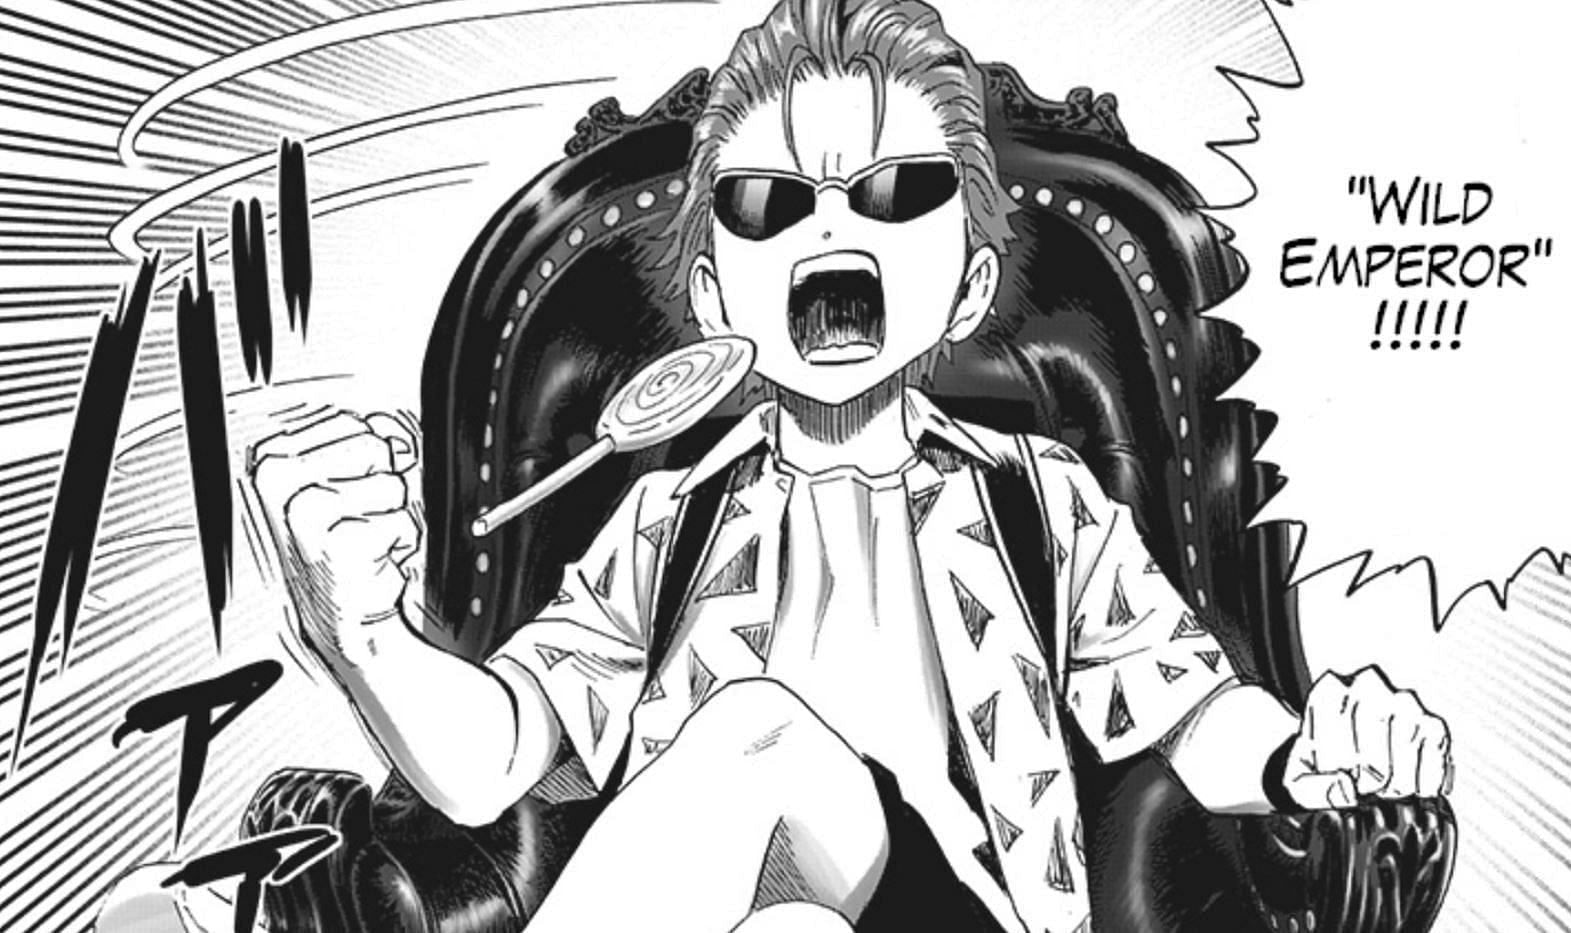 Wild Emperor as seen in the One Punch Man manga (Image via Shueisha)